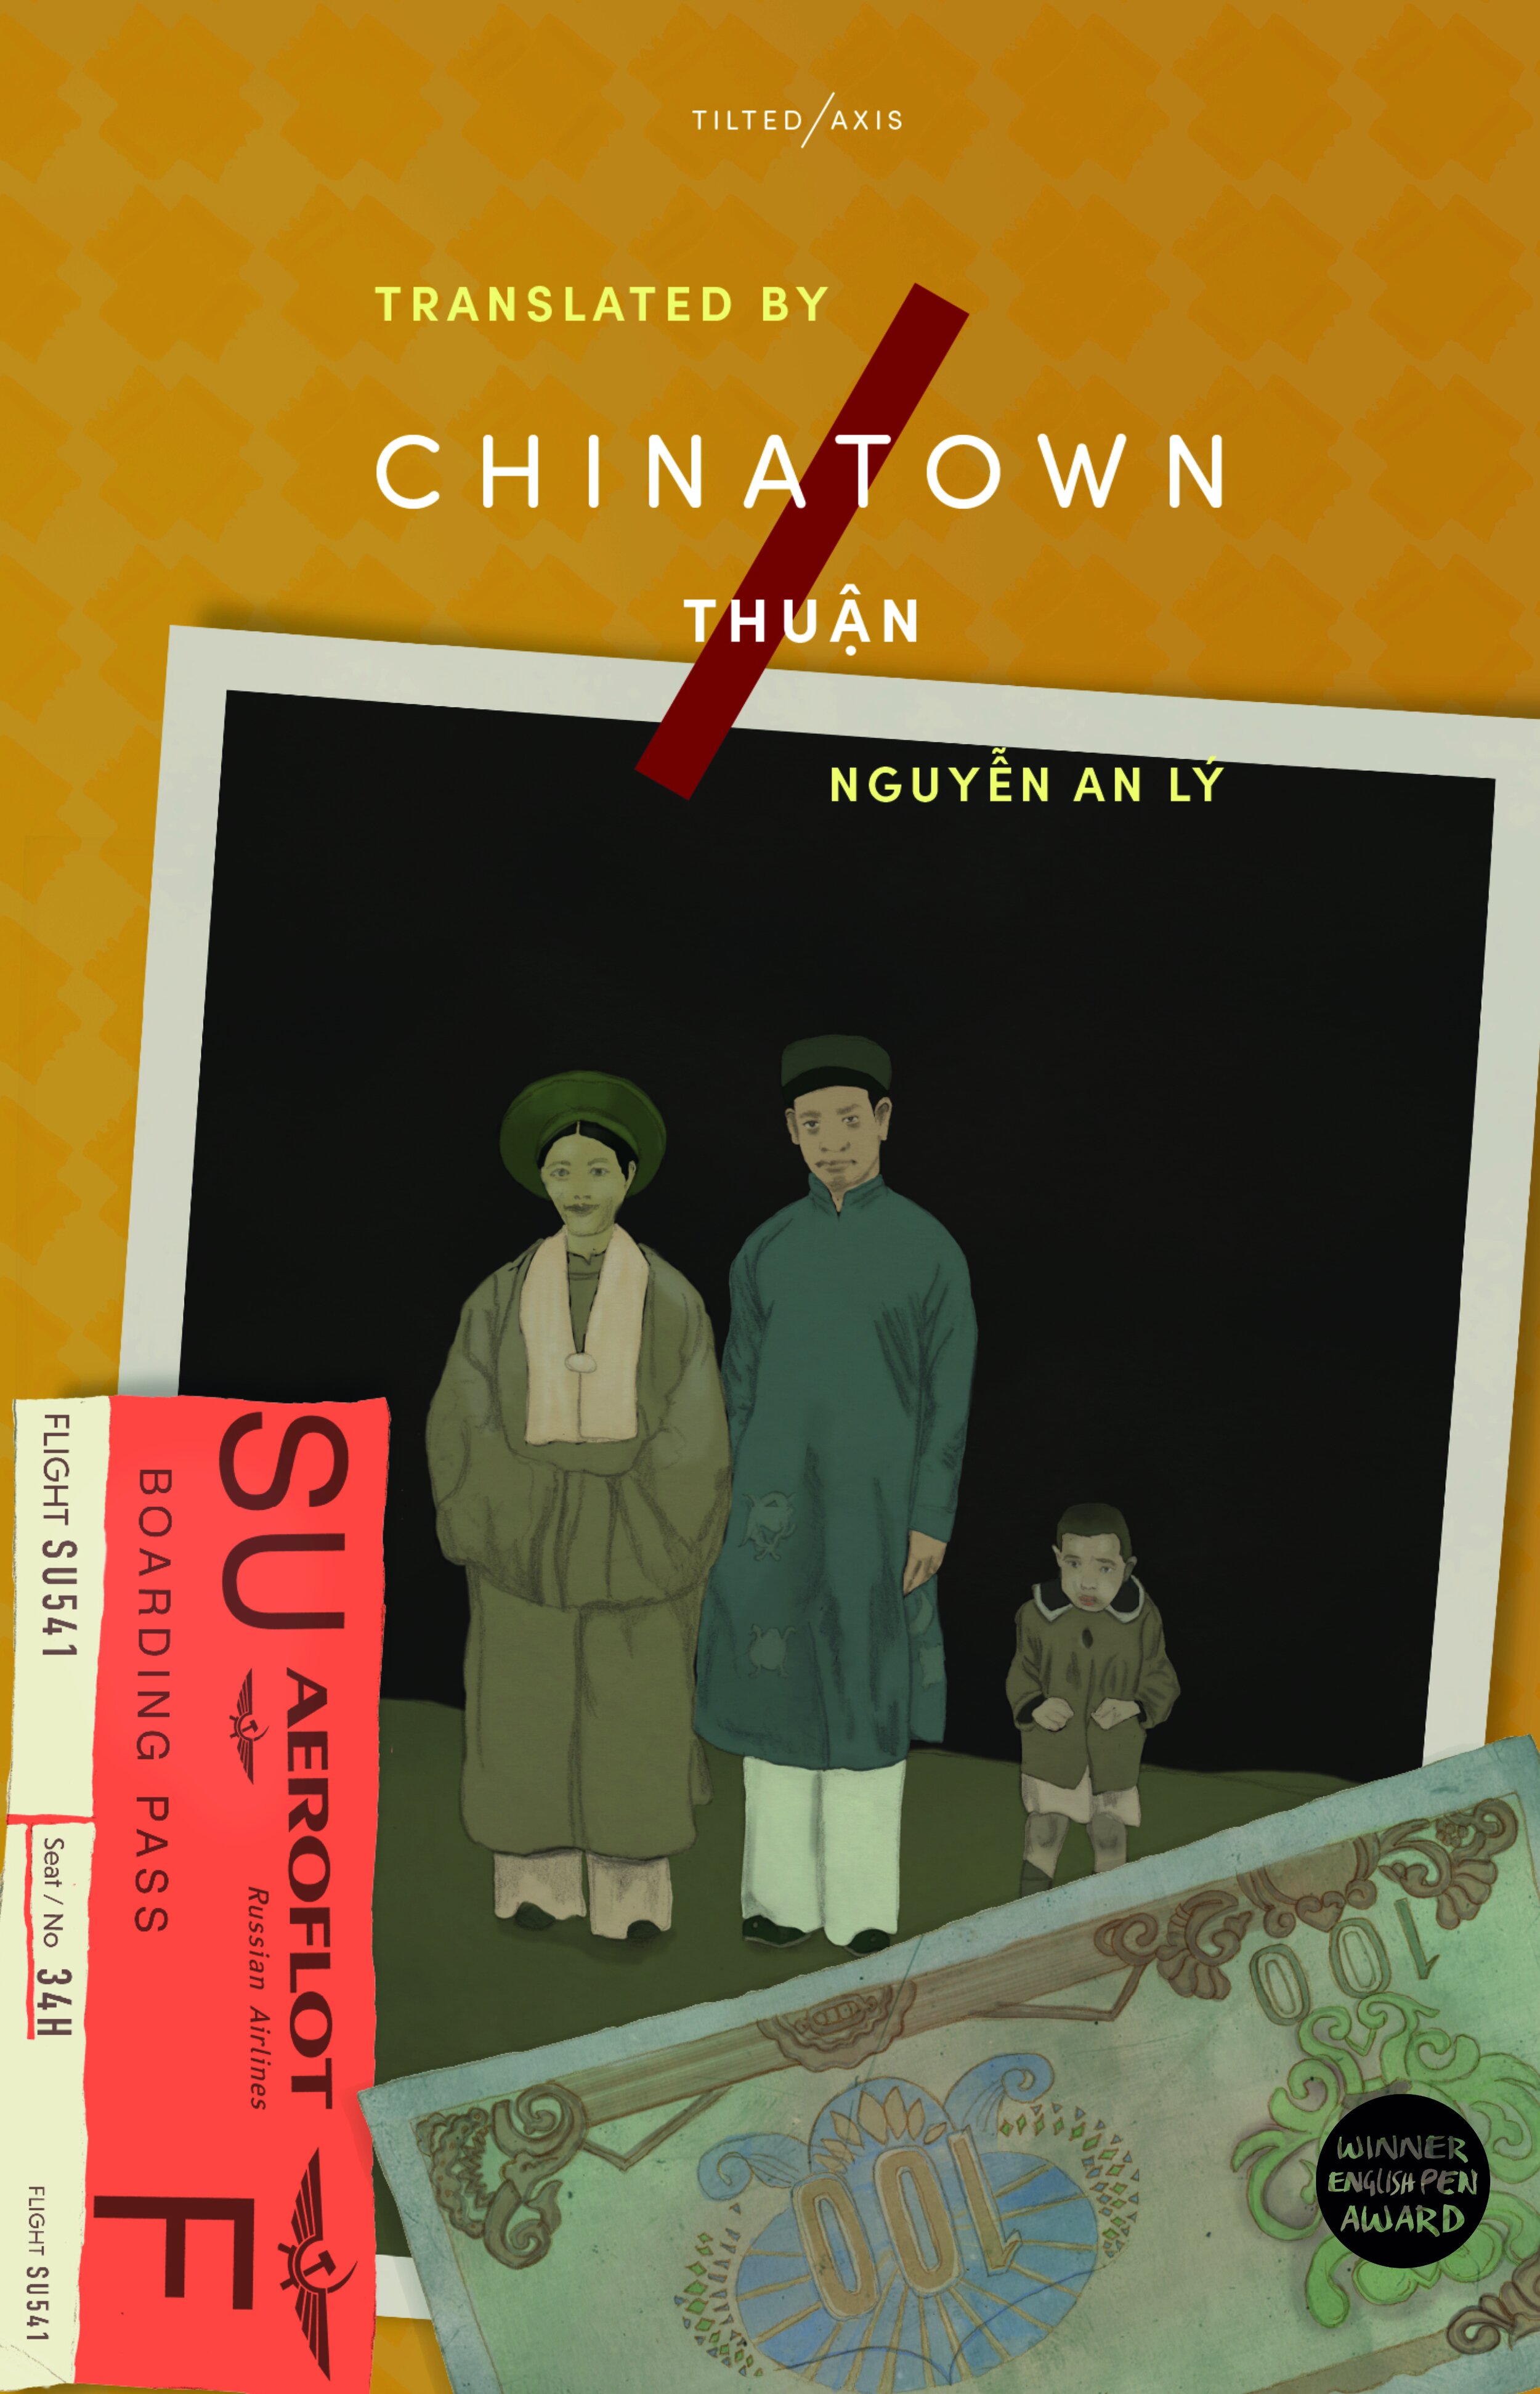 Chinatown_hi-res cover image.jpg